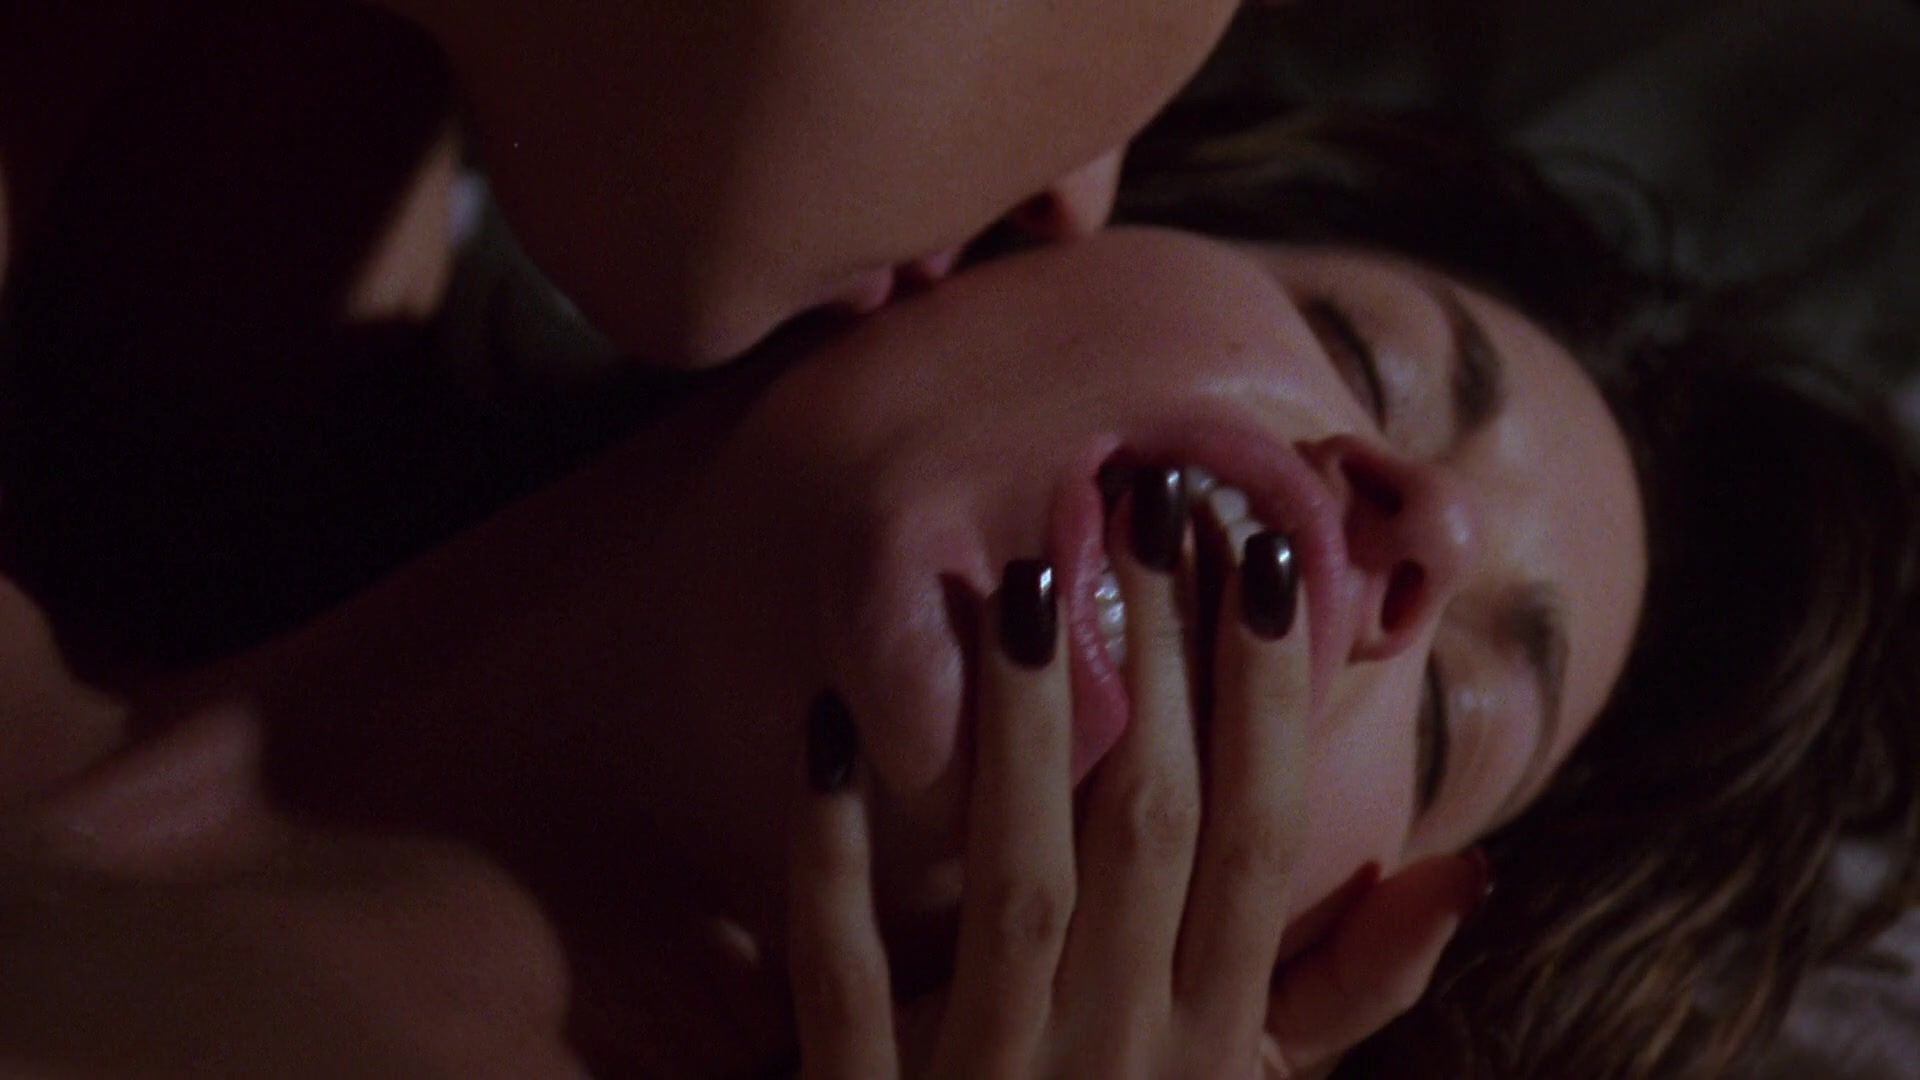 Thai Lesbian Scene with Jennifer Tilly, Gina Gershon - Bound (1996) Romantic